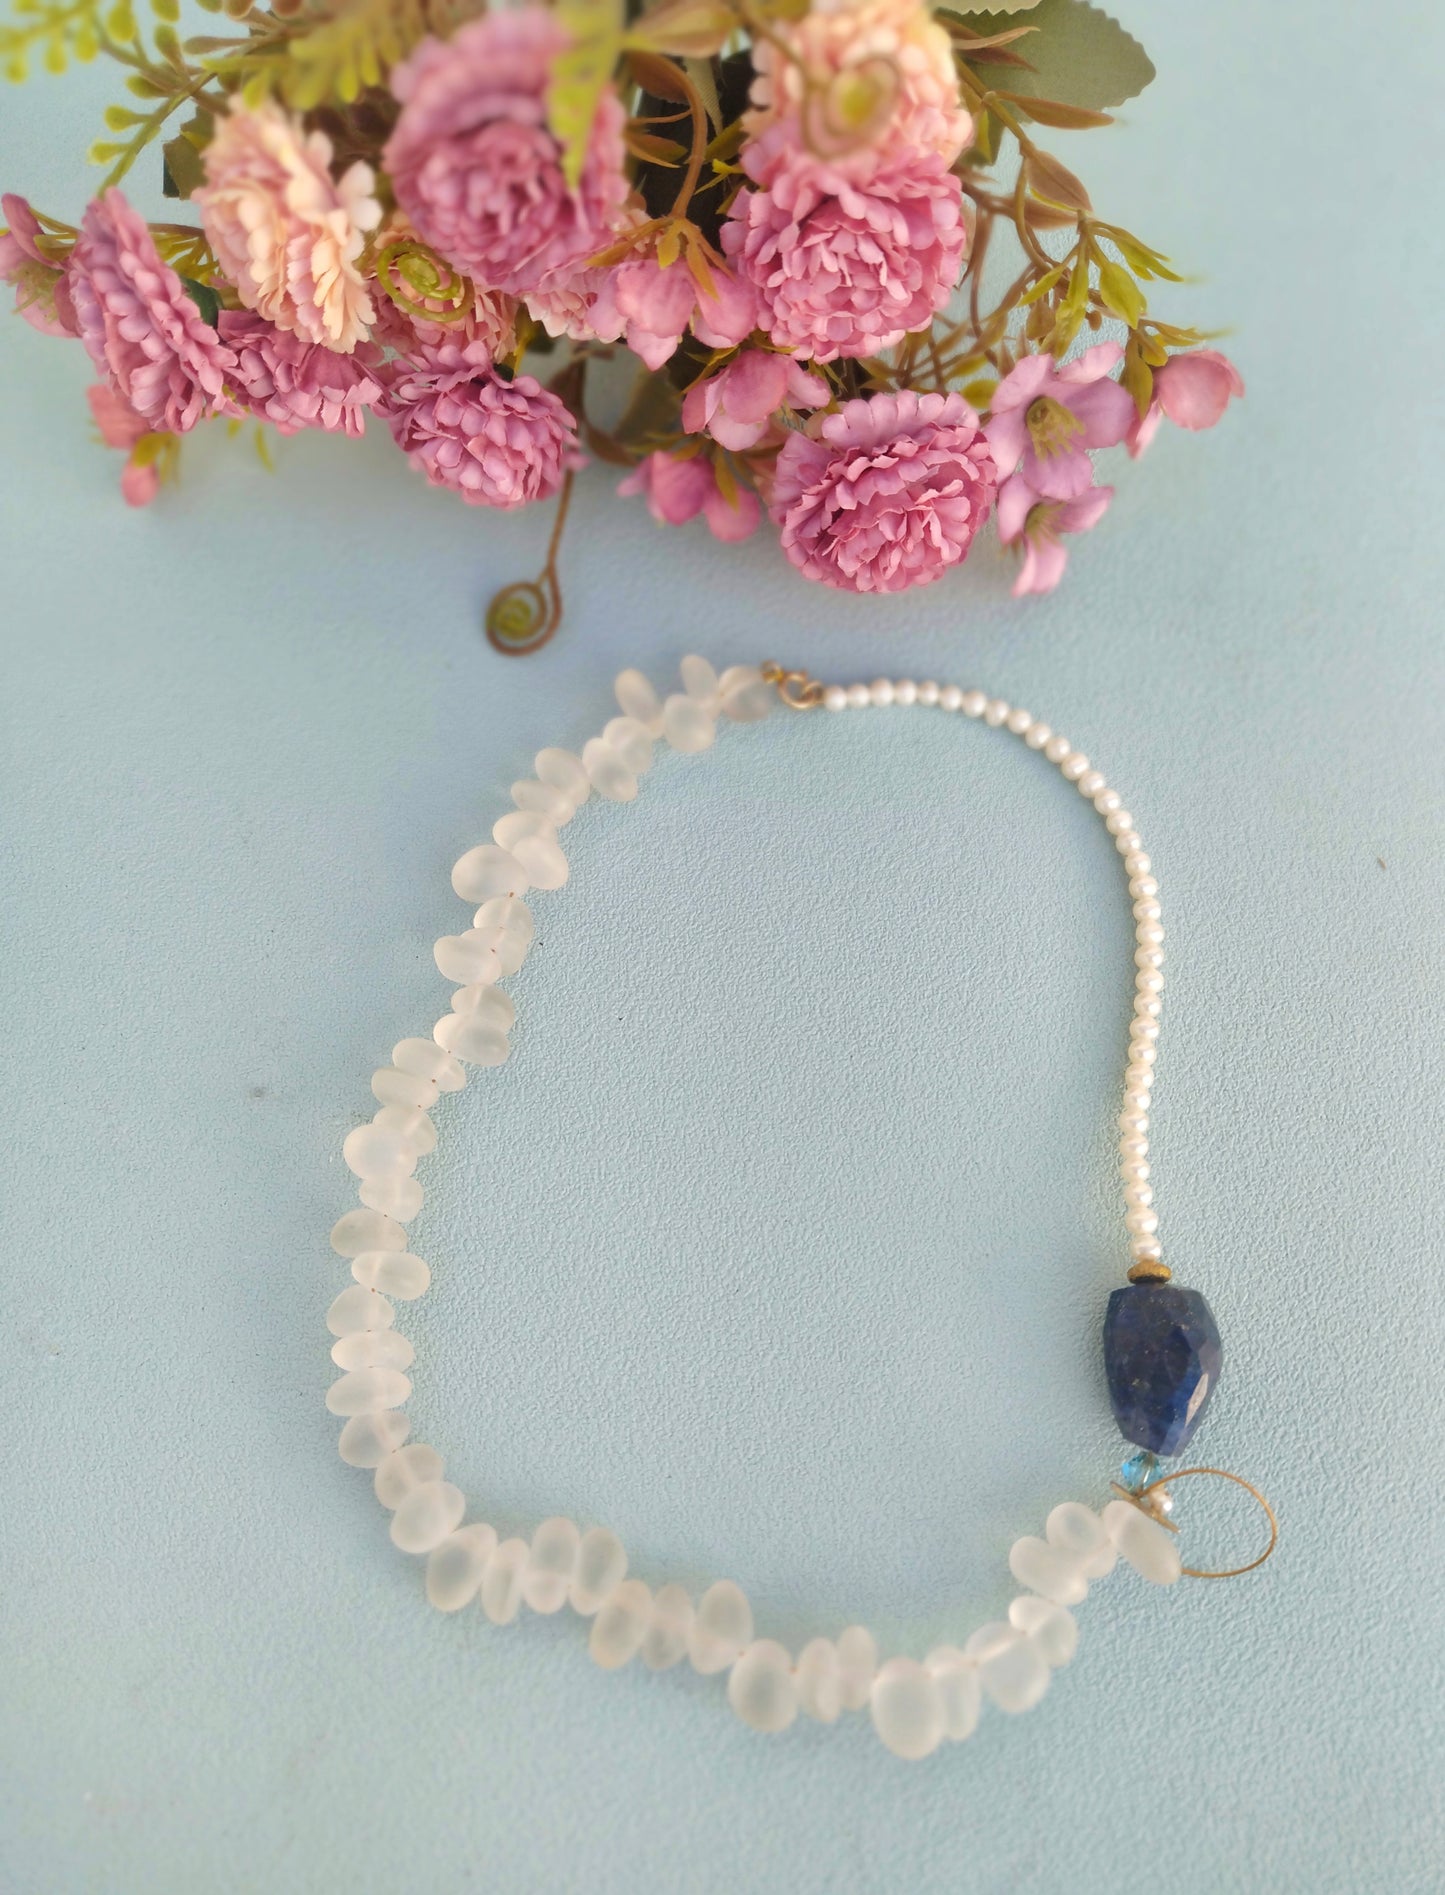 Moonstone And Lapis Lazuli Bracelet, Celestial Gemstone Bracelet